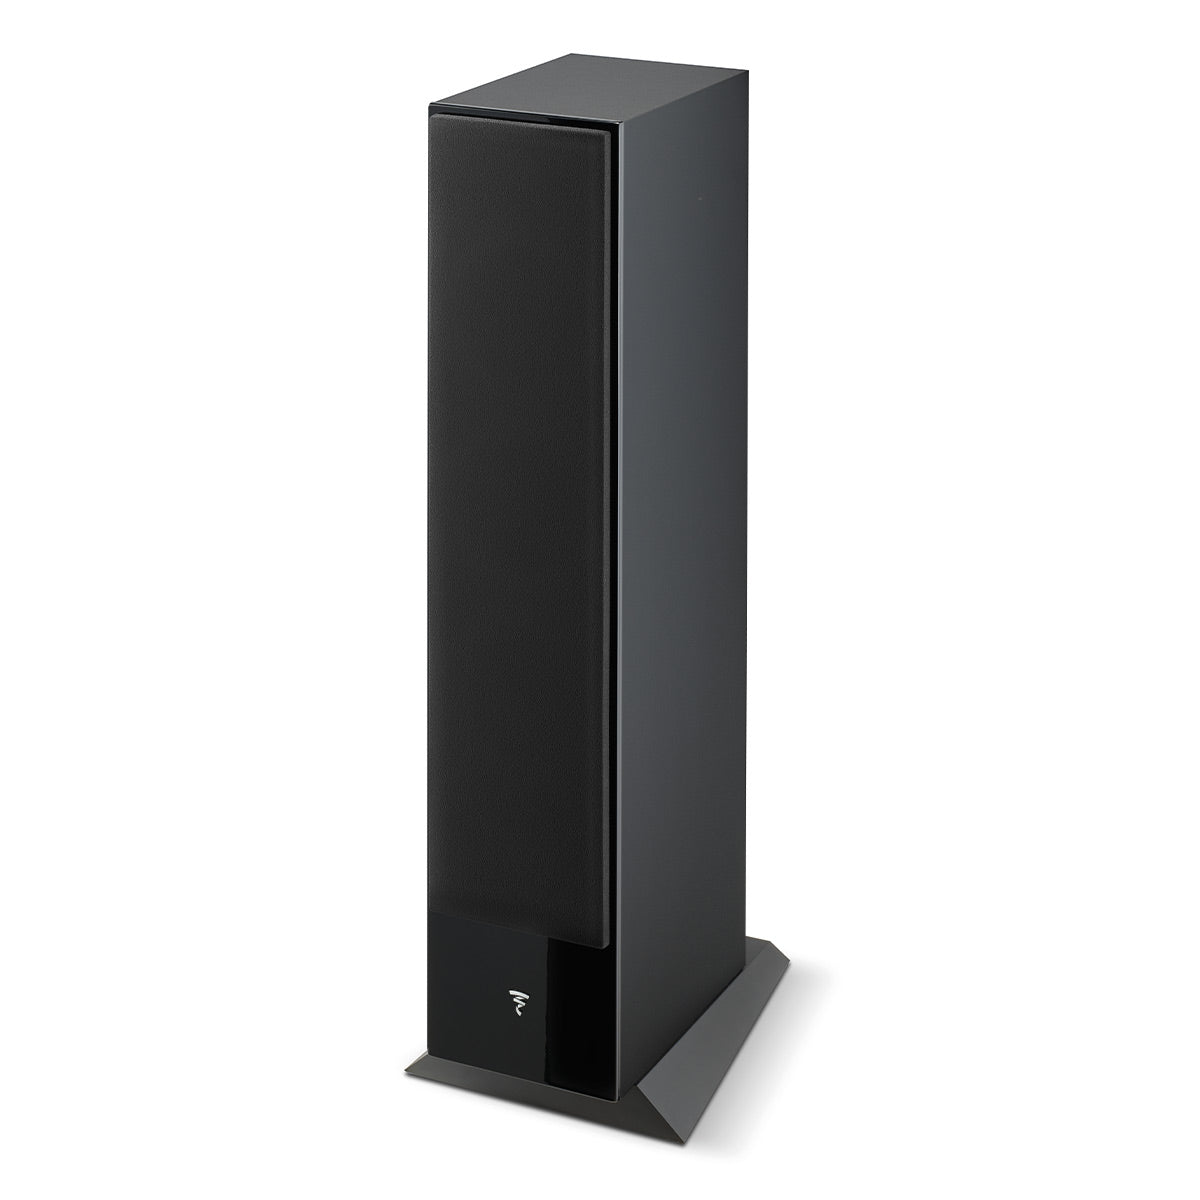 Focal Theva No.2 Slim 3-Way Bass-Reflex Floorstanding Loudspeaker with 5" Speaker Drivers - Each (Black)